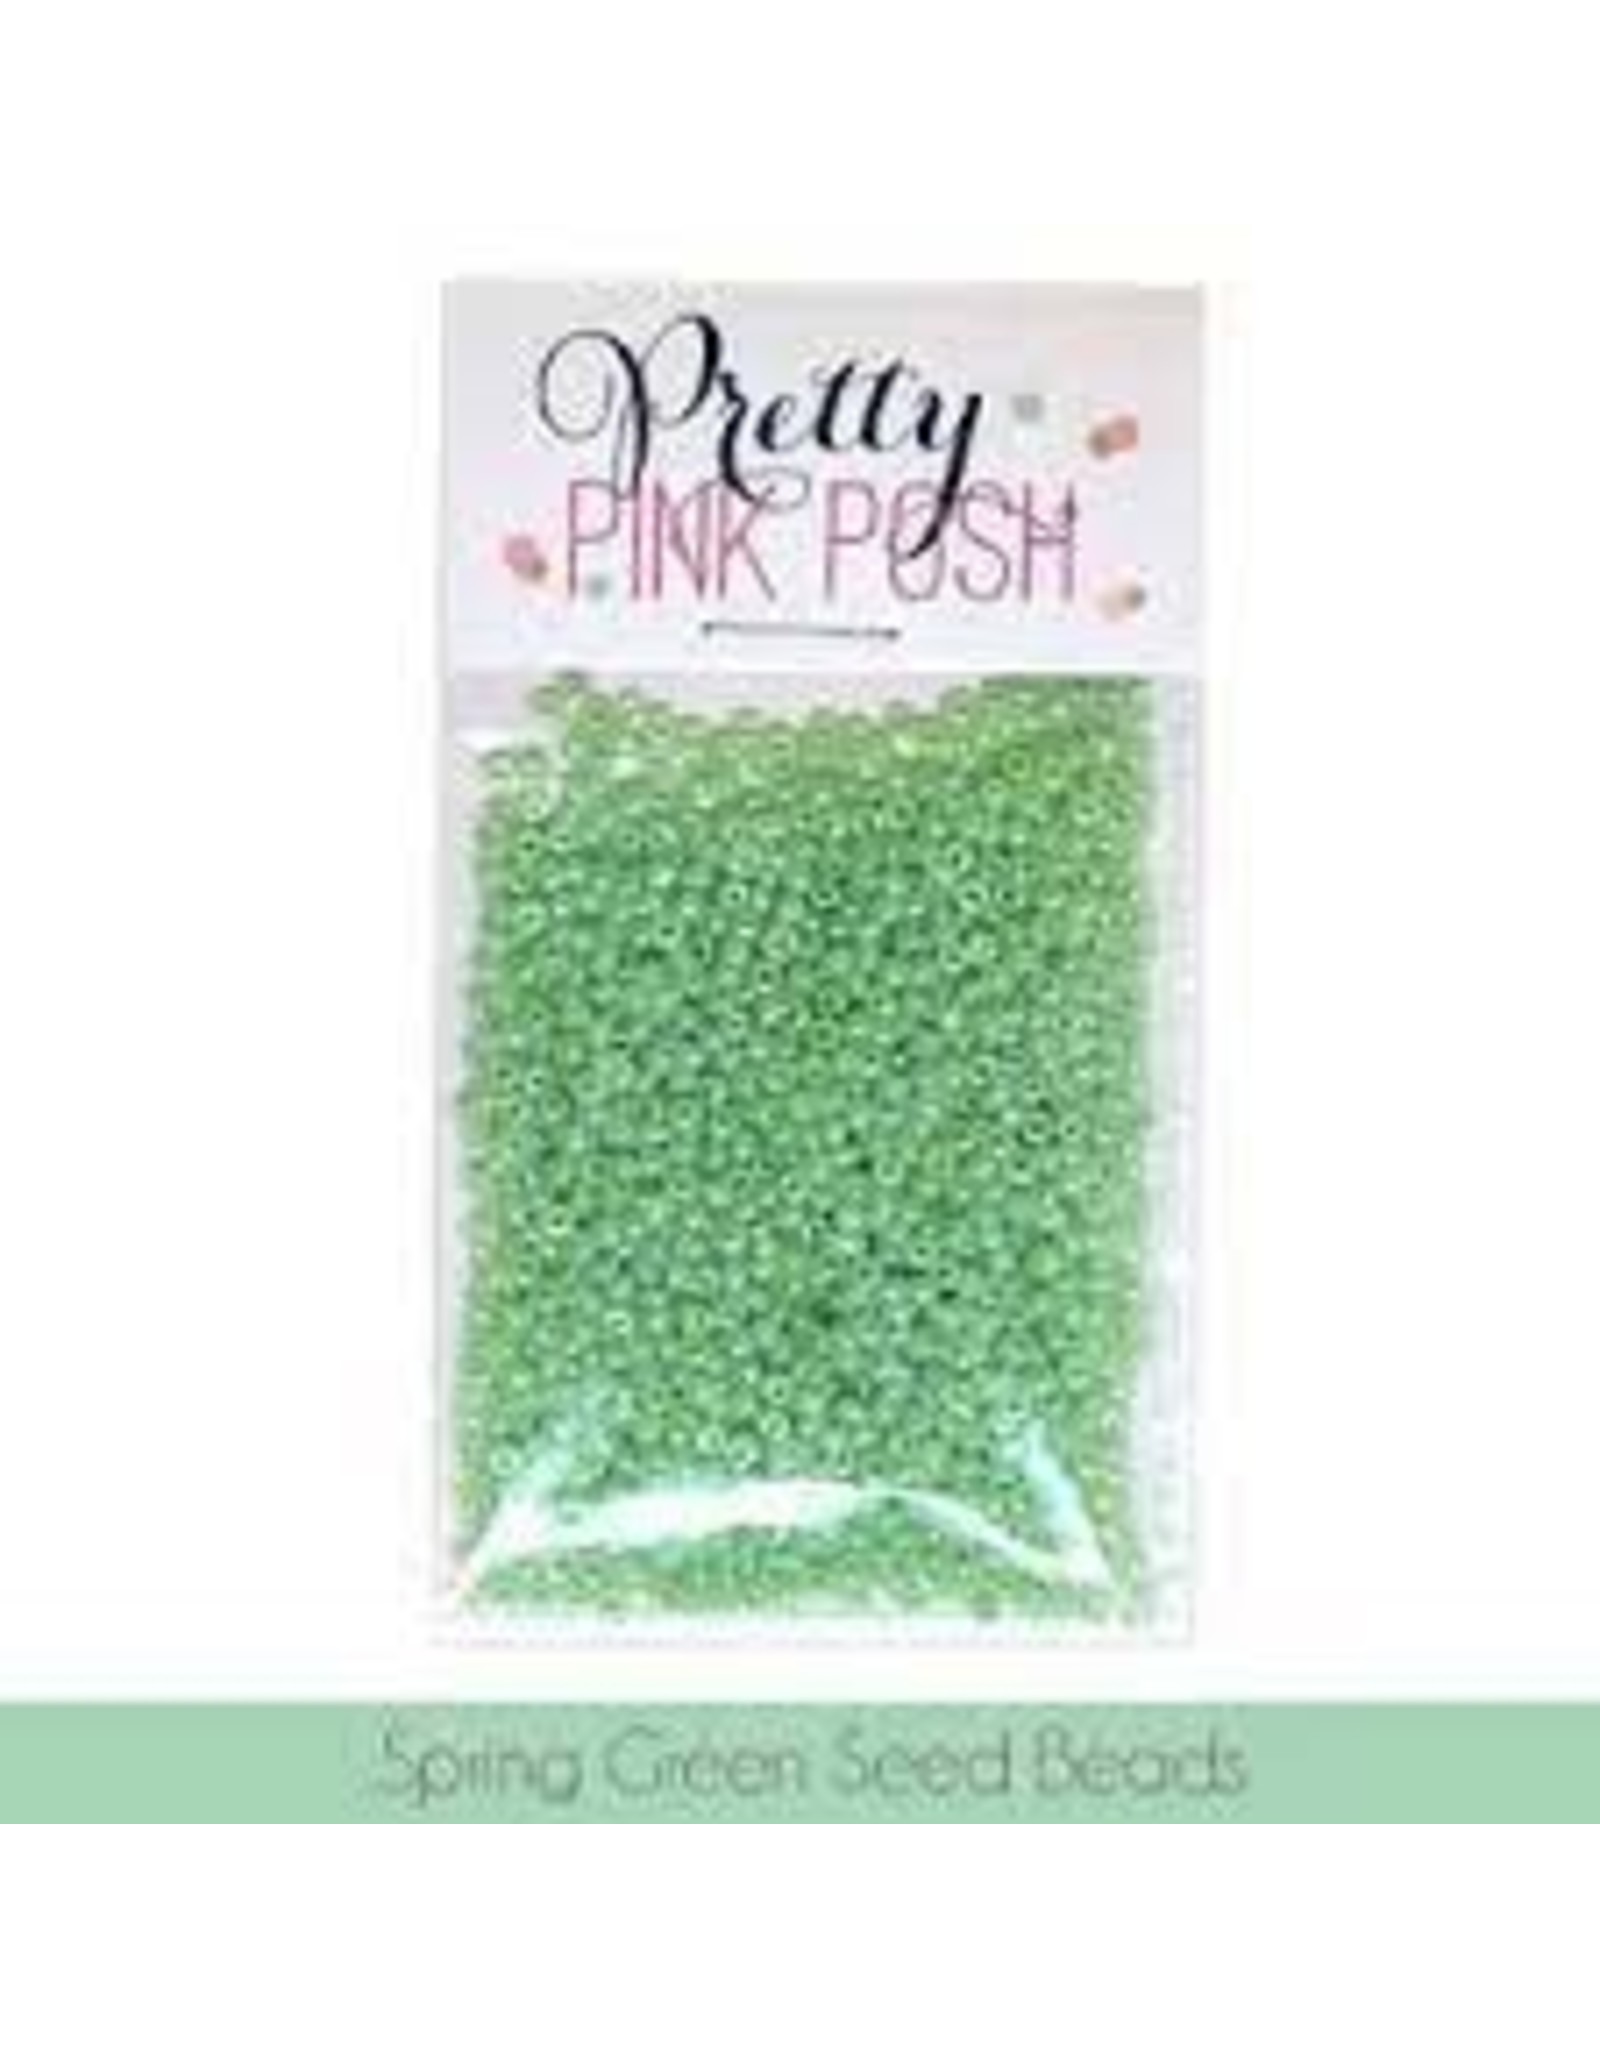 Pretty Pink Posh Spring Green Seed Beads